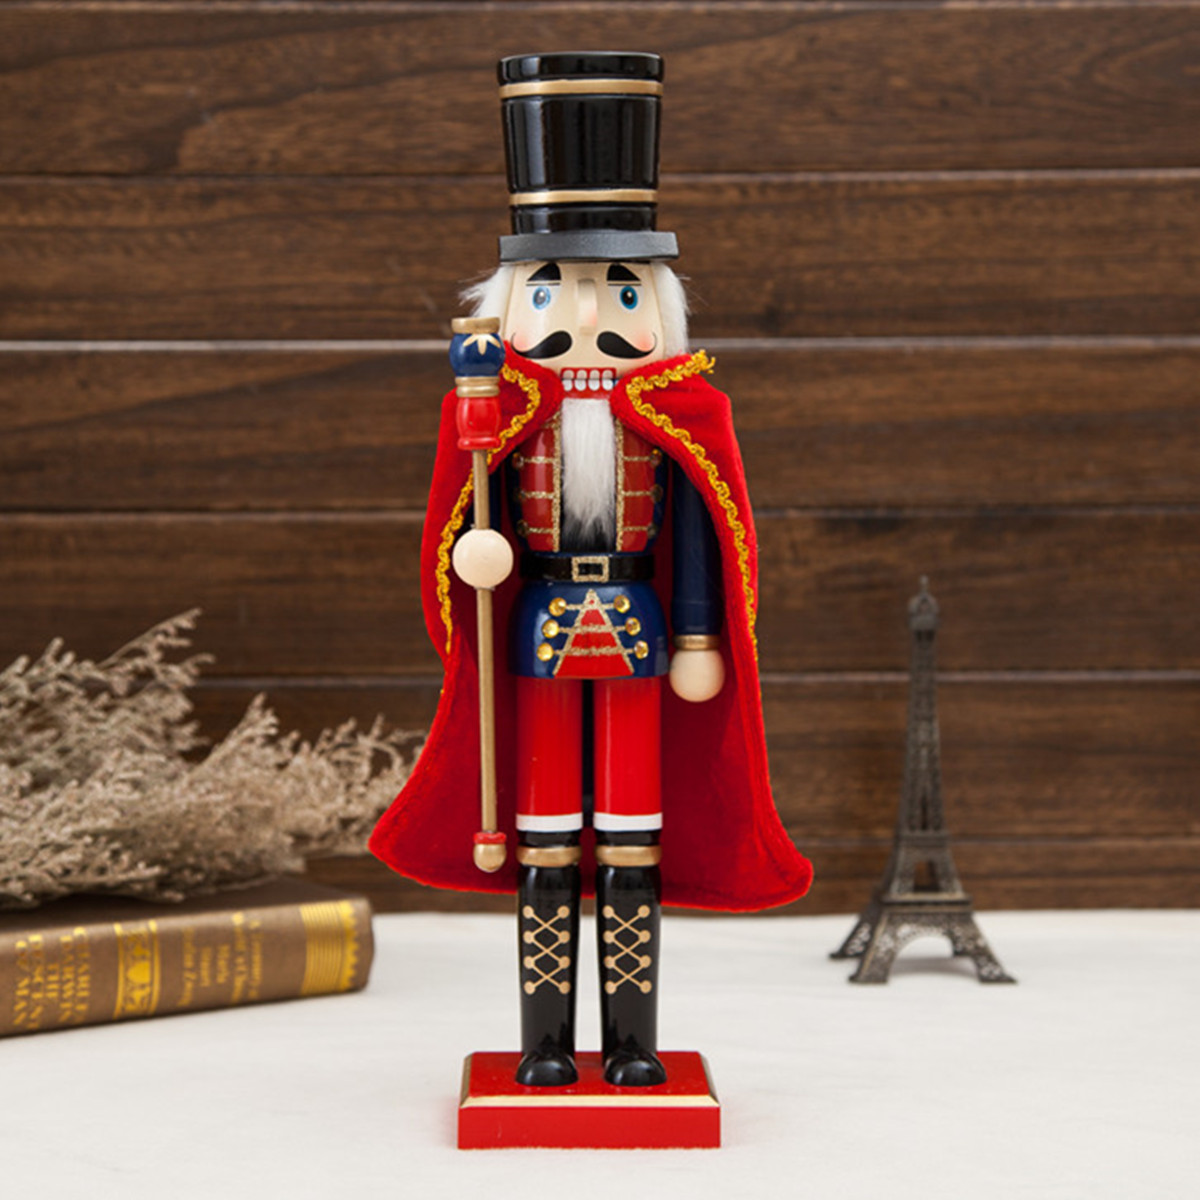 38cm-Wooden-Nutcracker-Doll-Soldier-Vintage-Handcraft-Decoration-Christmas-Gifts-1394894-9